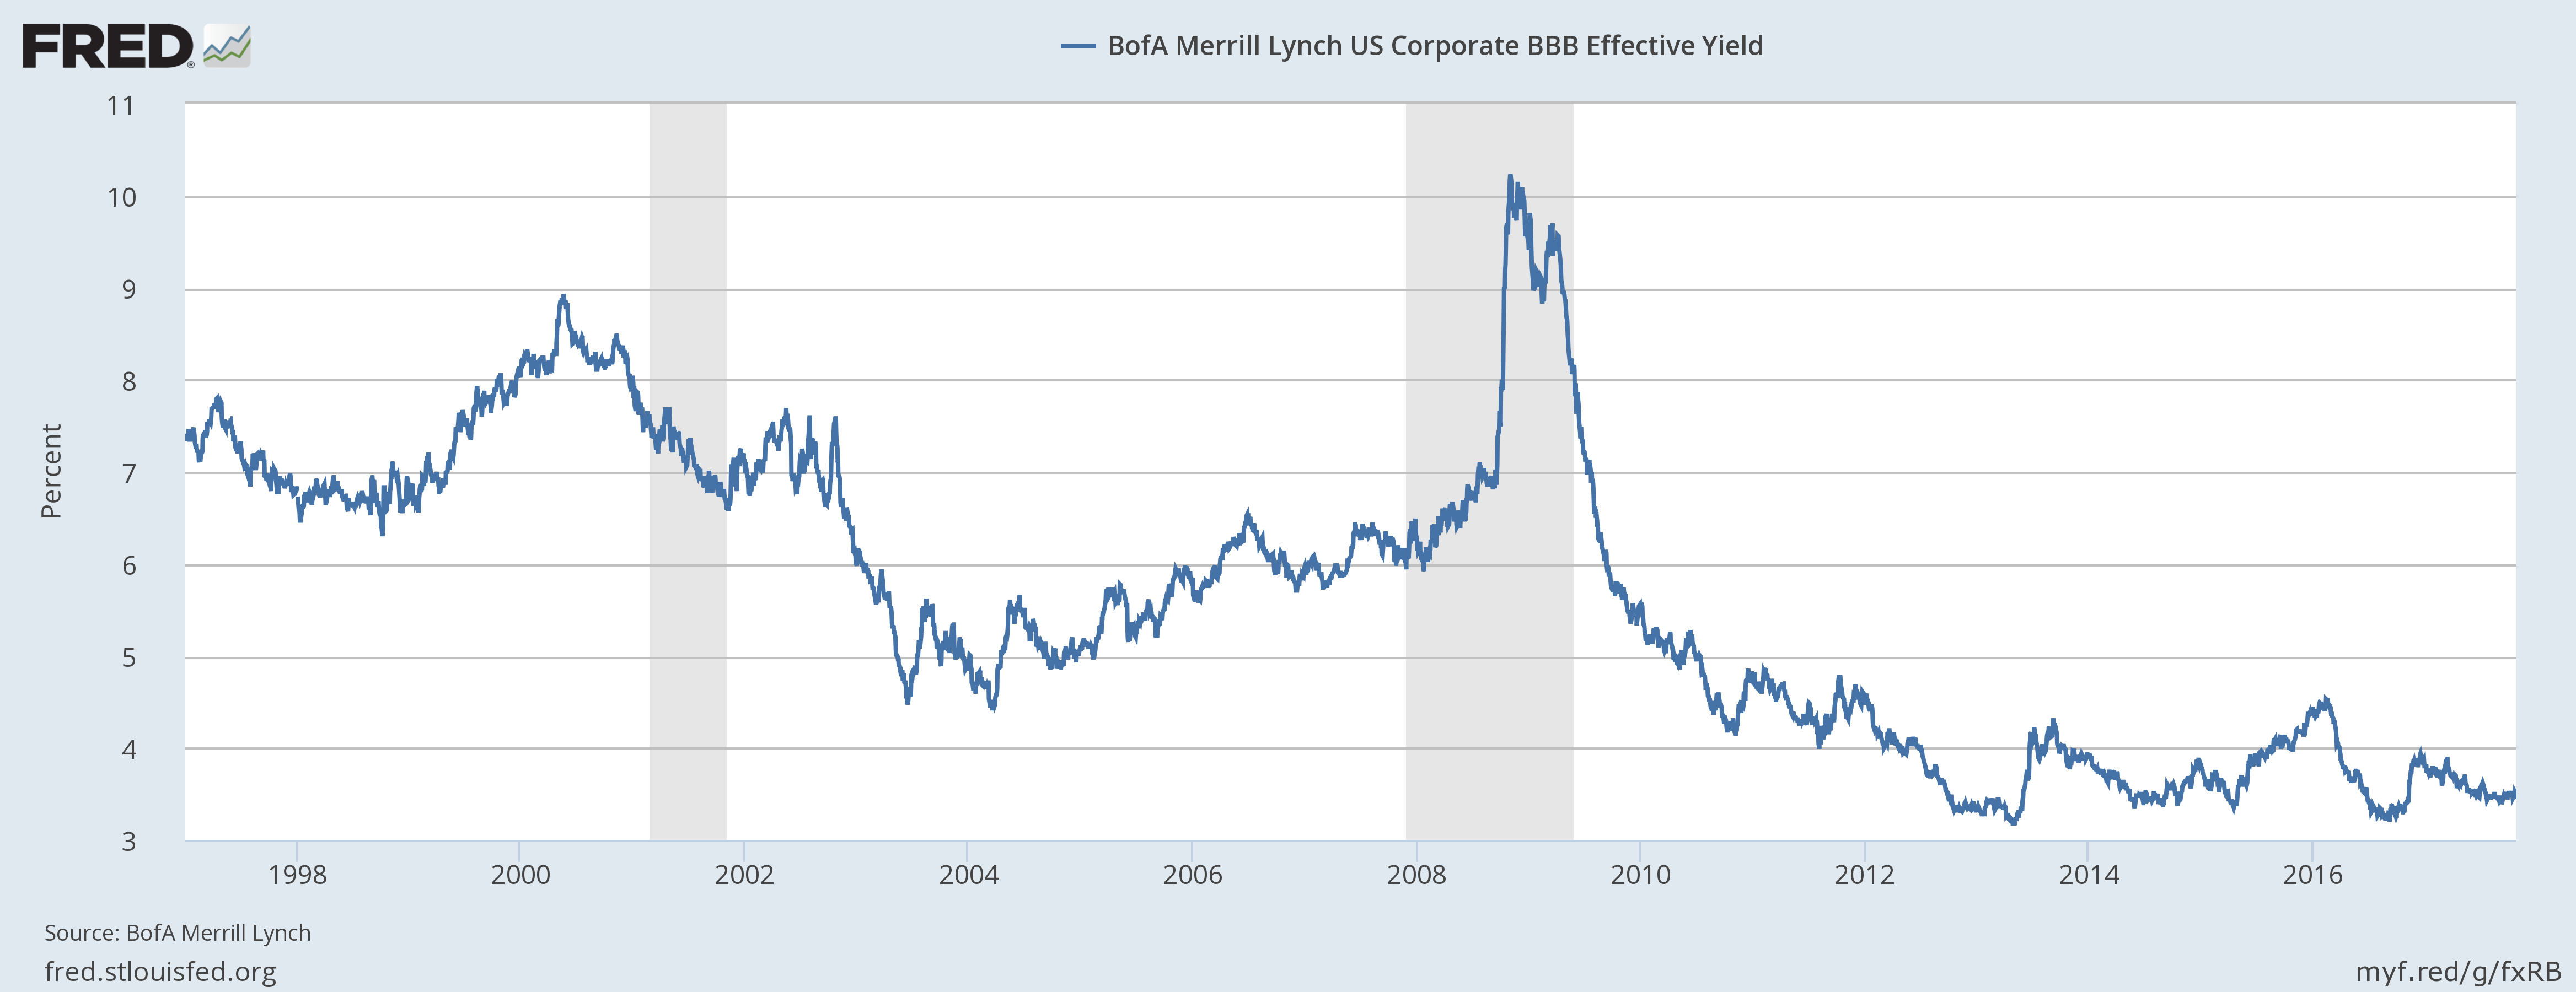 Bofa Merrill Lynch US Corporate BBB Effective Yield